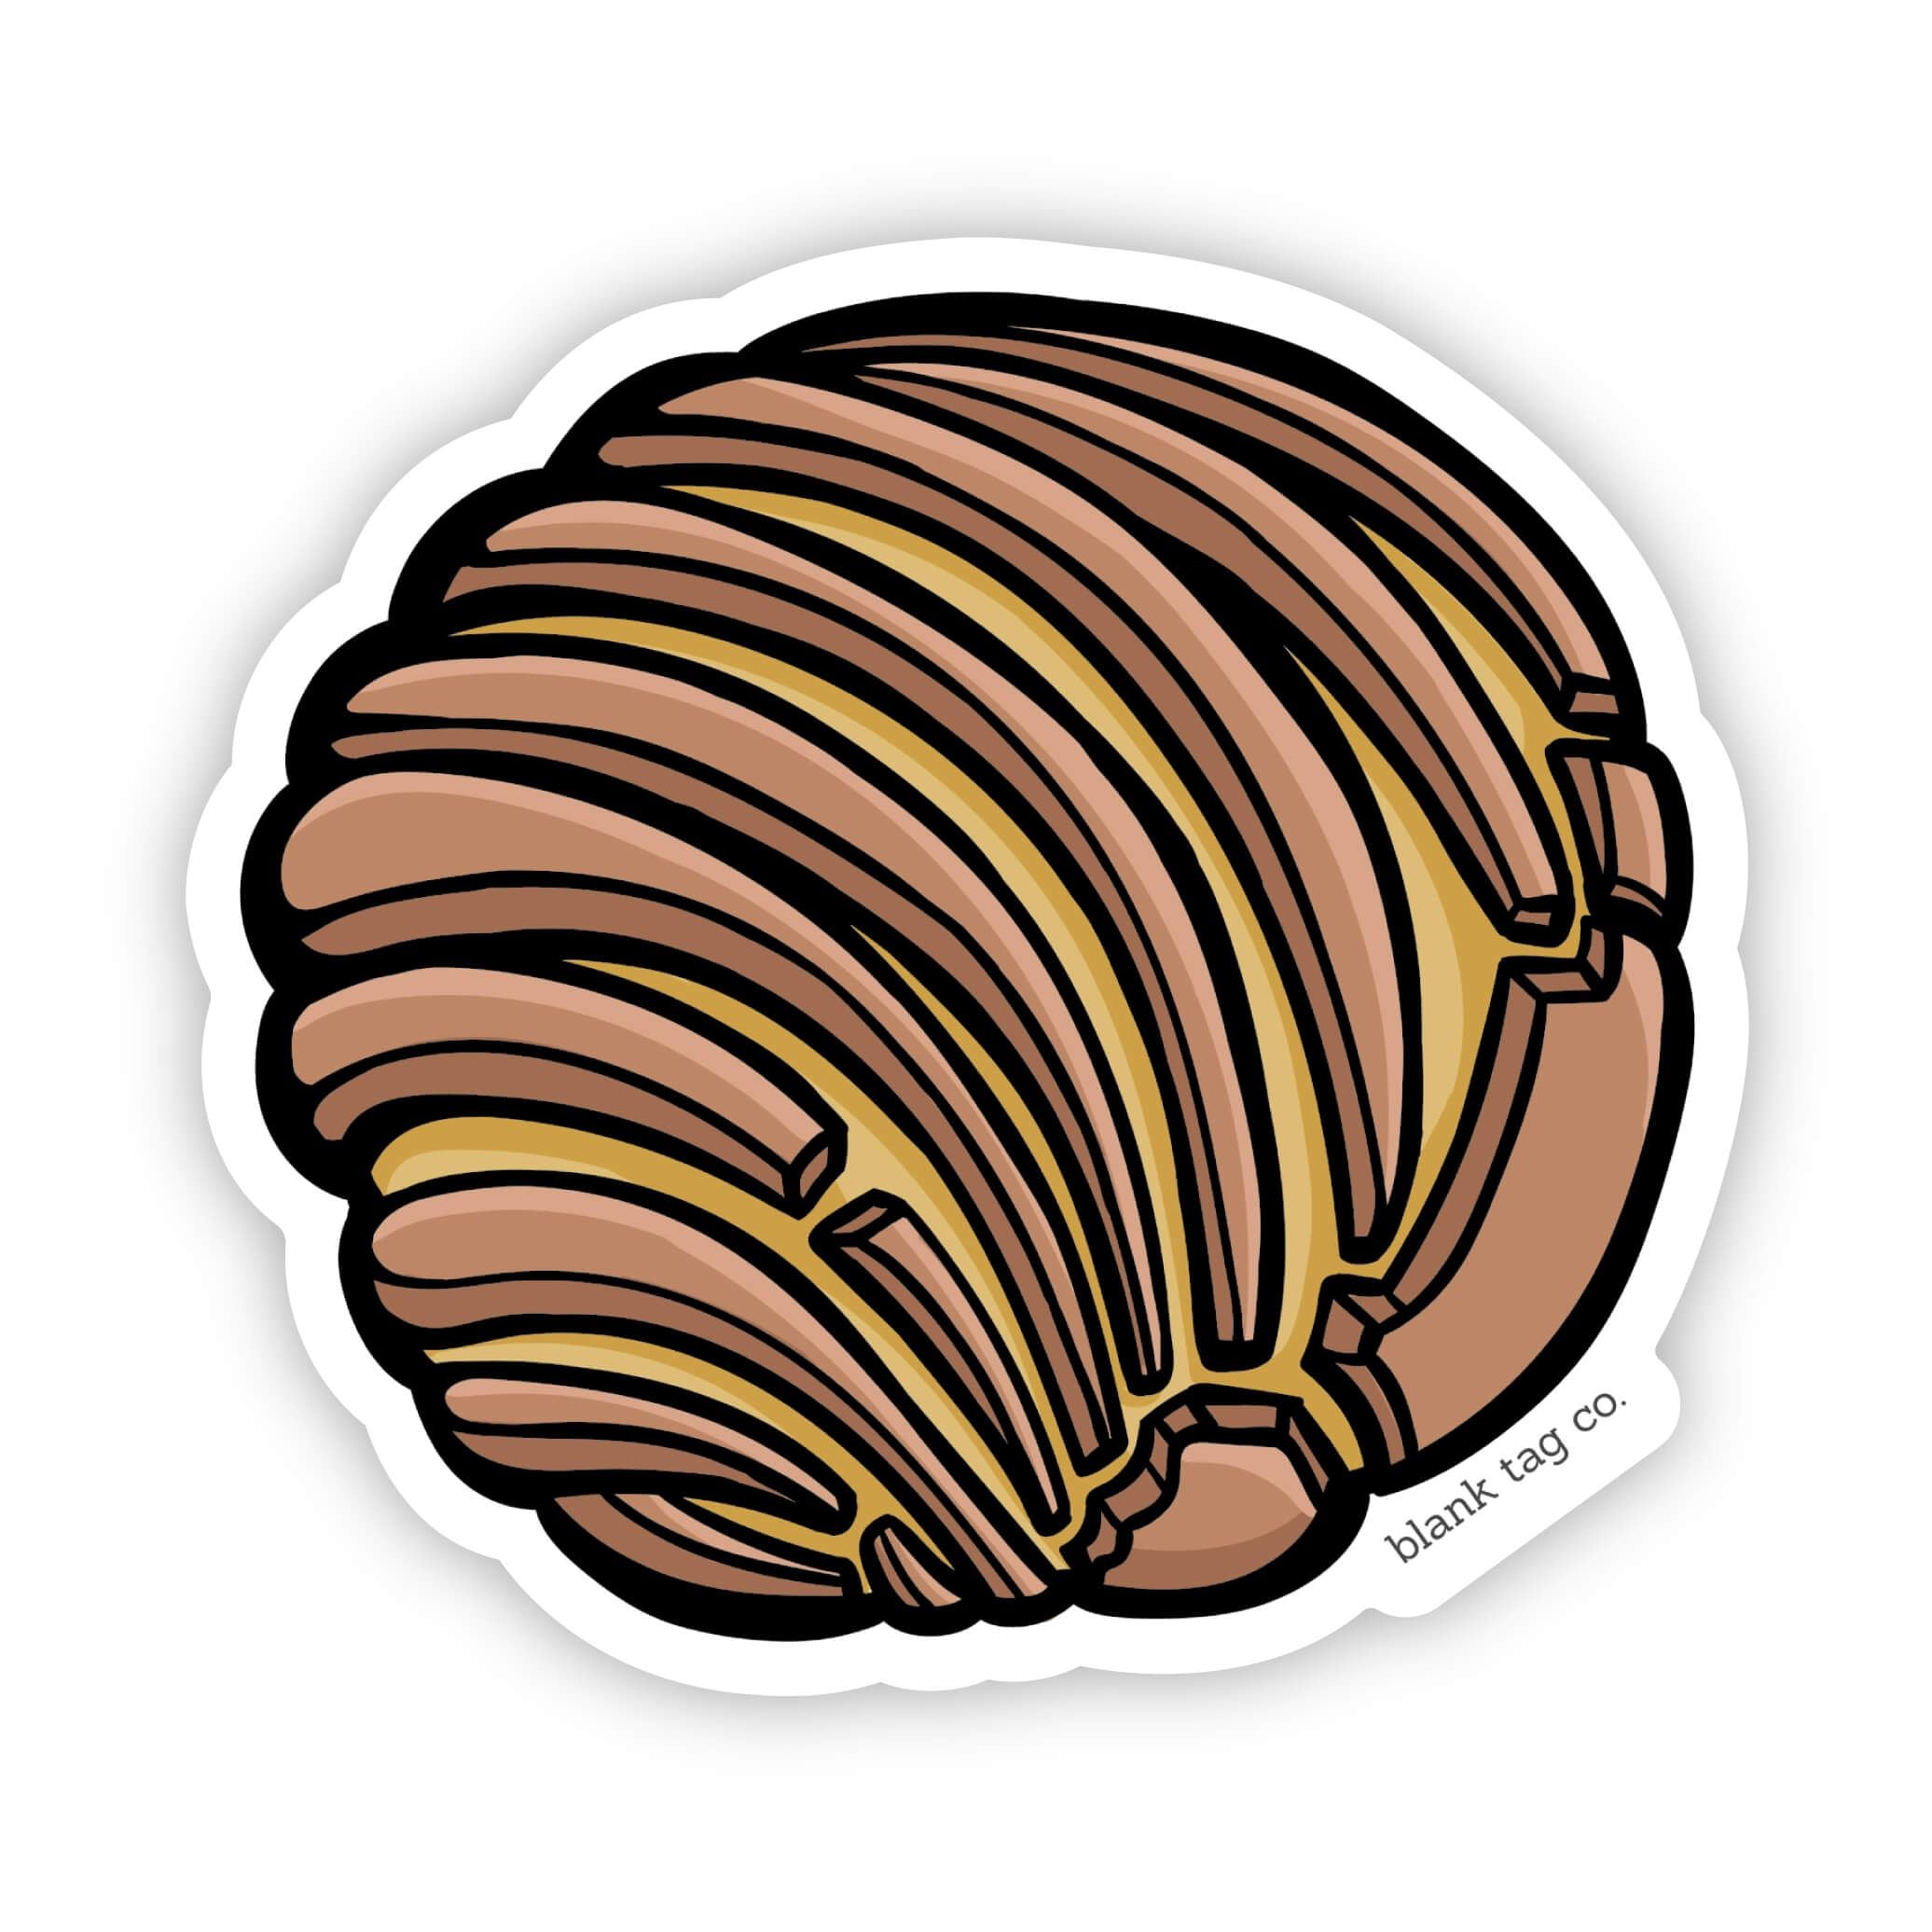 The Chocolate Concha Sticker